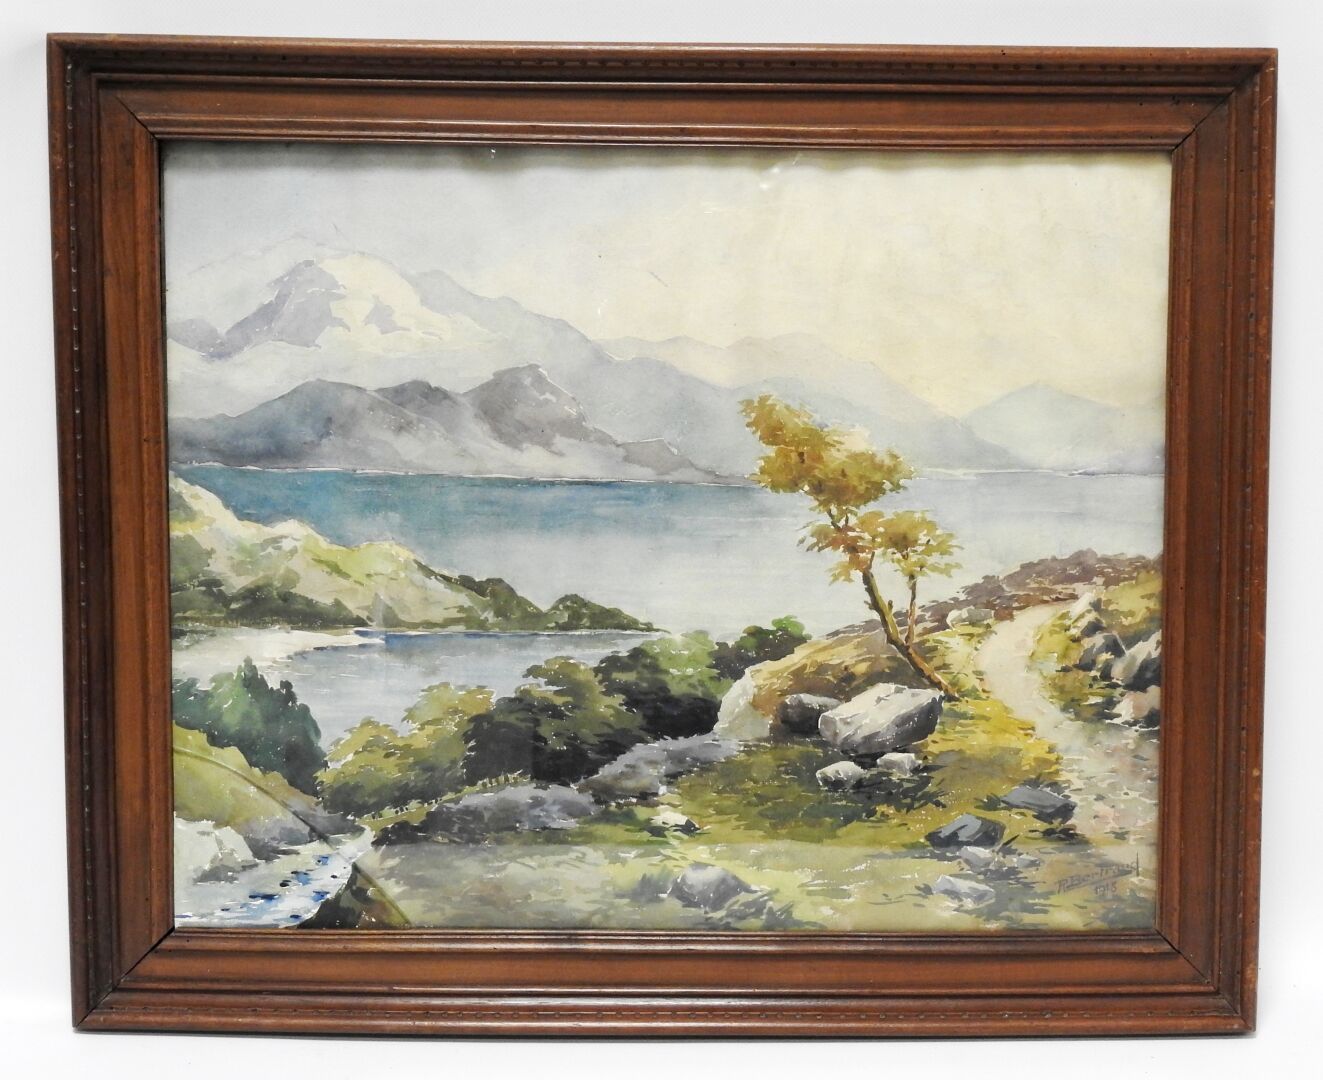 Null R.BERTRAND - 20世纪
山区风景。
水彩画。右下方有签名和日期1918年。
47 x 59 cm at sight.
意外事件